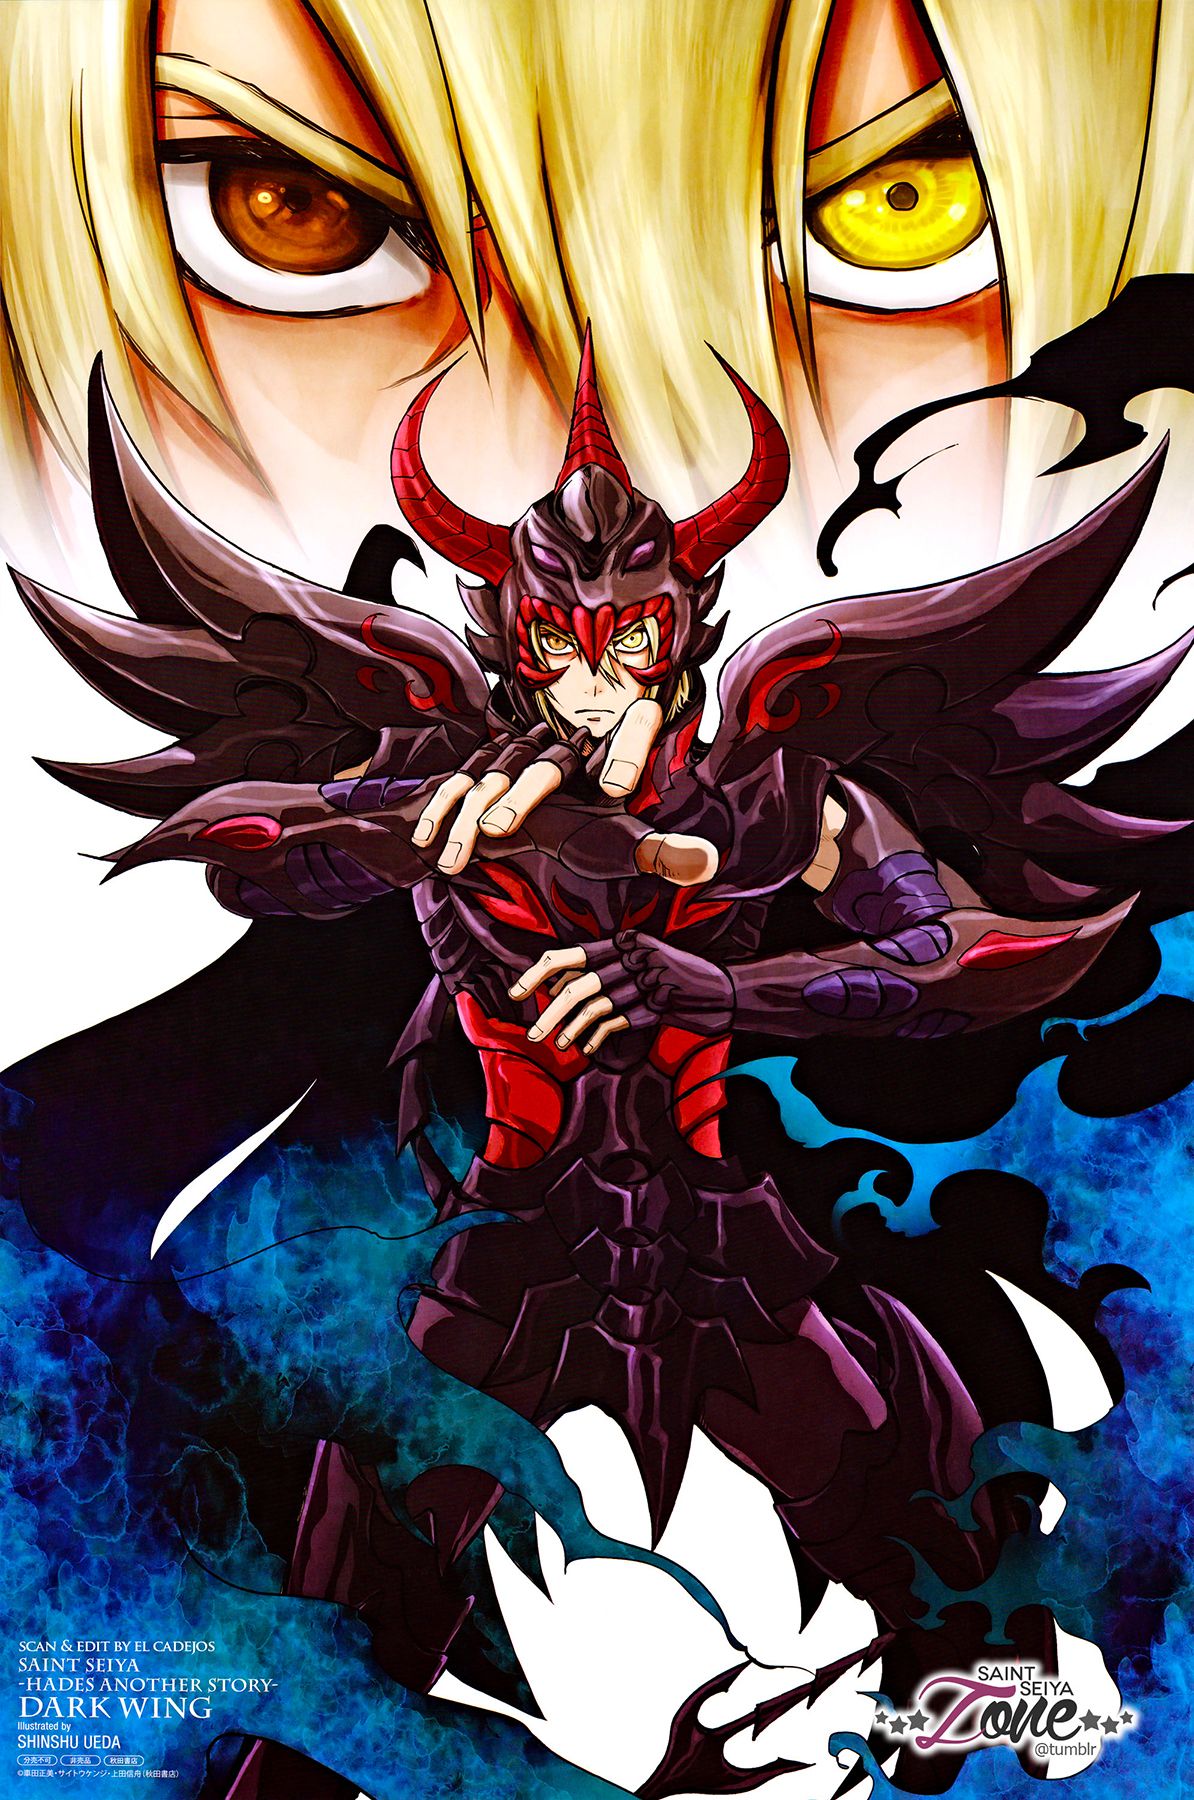 Saint seiya dark wing manga visual 1